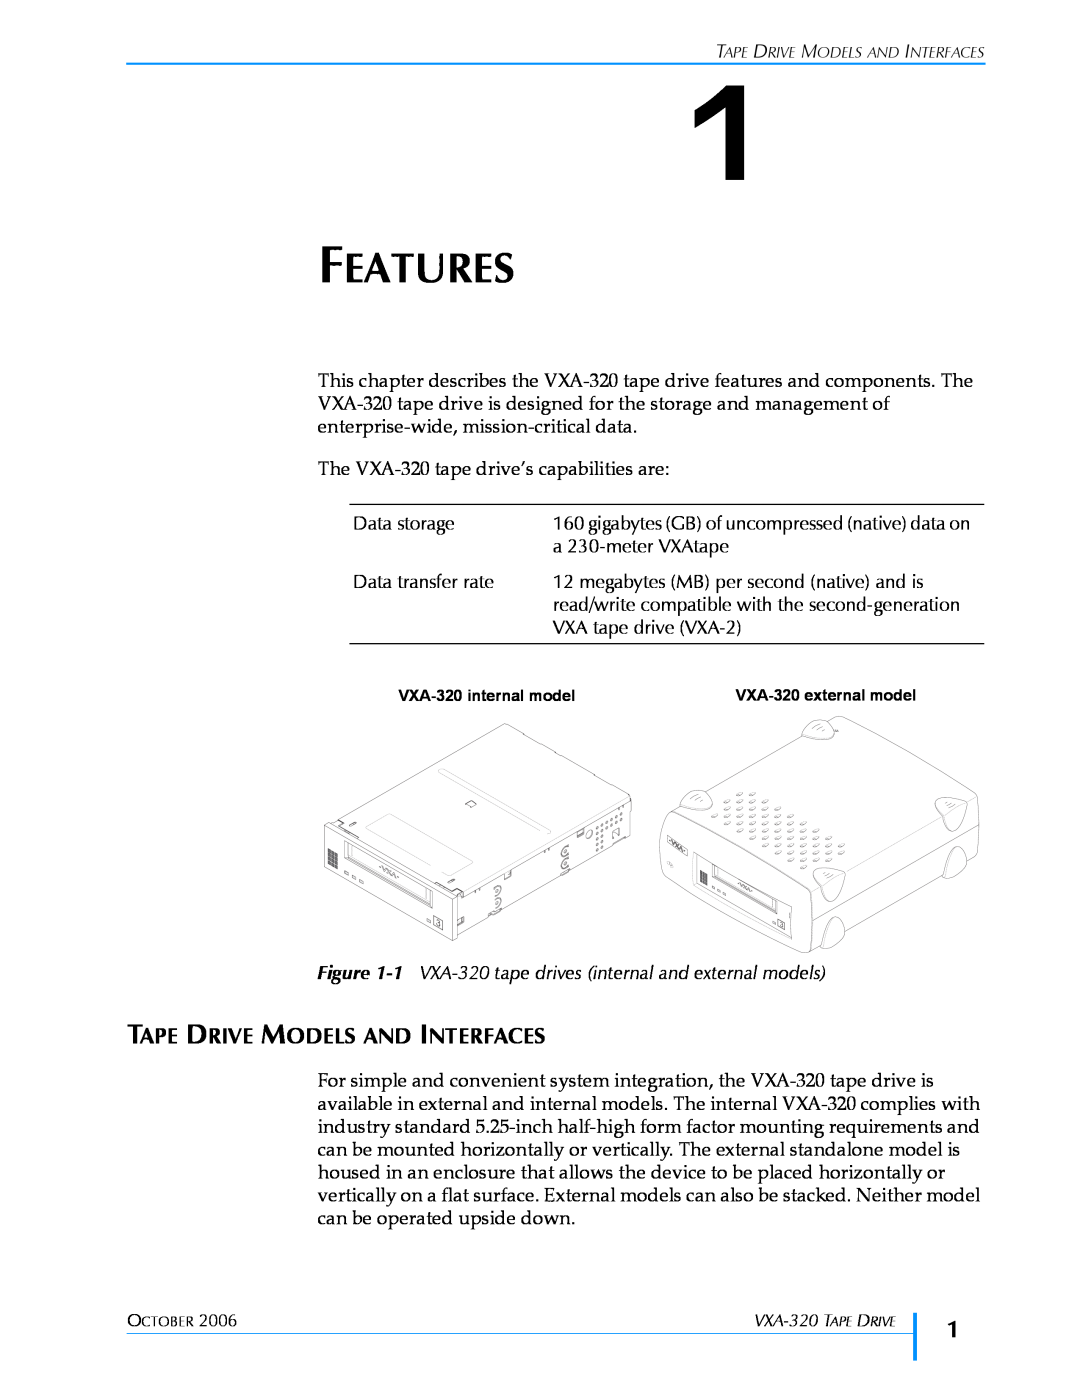 Tandberg Data VXA-320 (VXA-3) manual Features, Tape Drive Models And Interfaces 